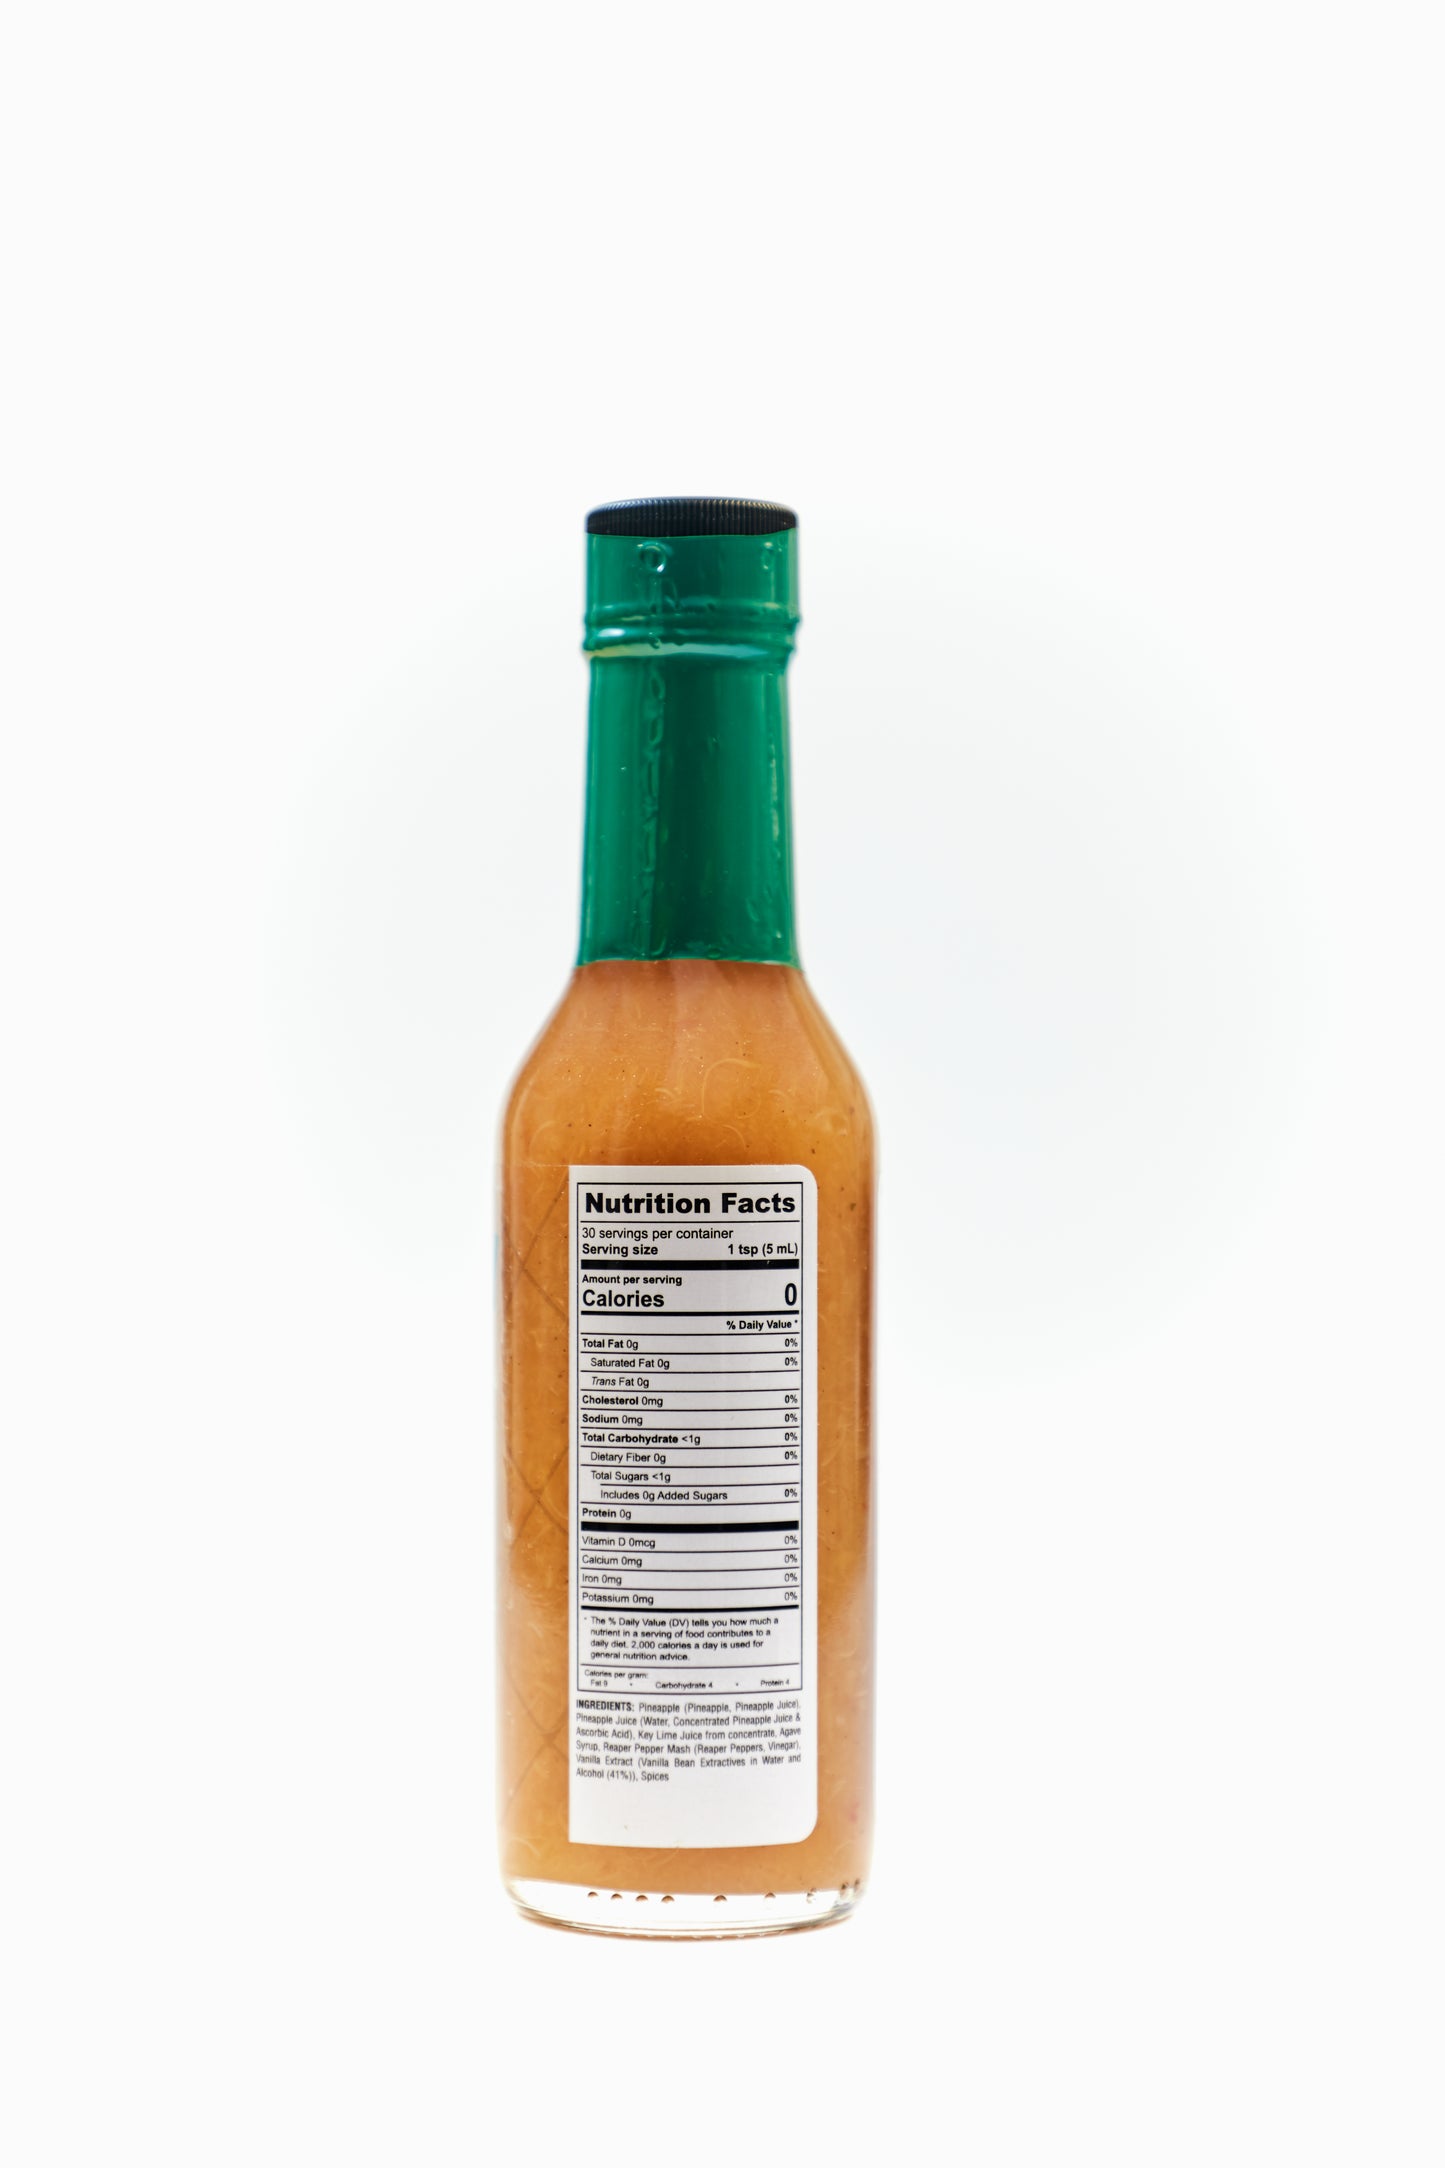 FML Pineapple Hot Sauce